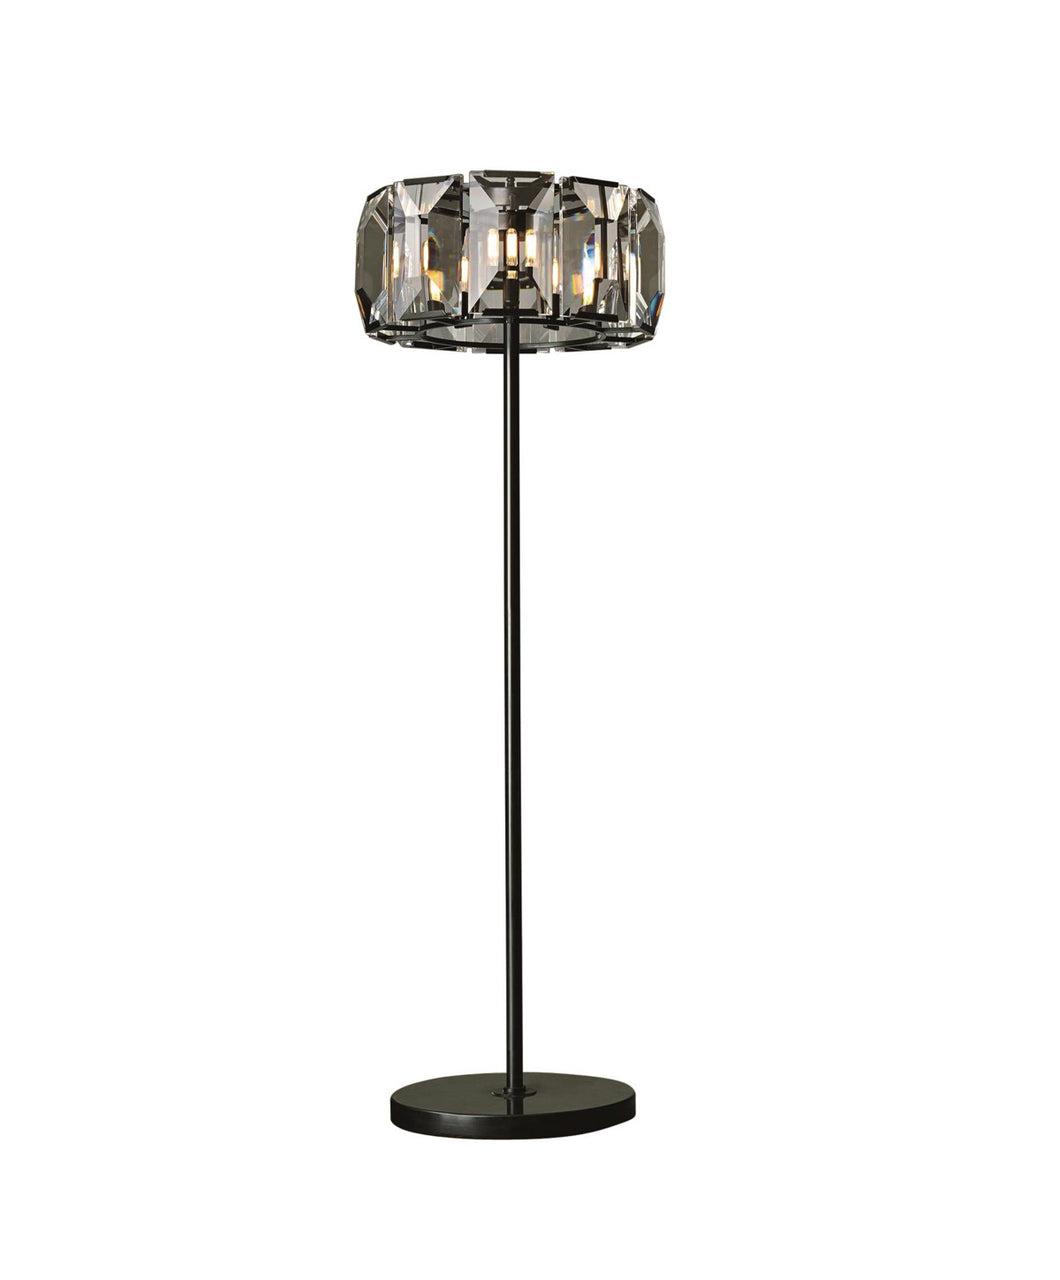 8 Light Floor Lamp with Black finish